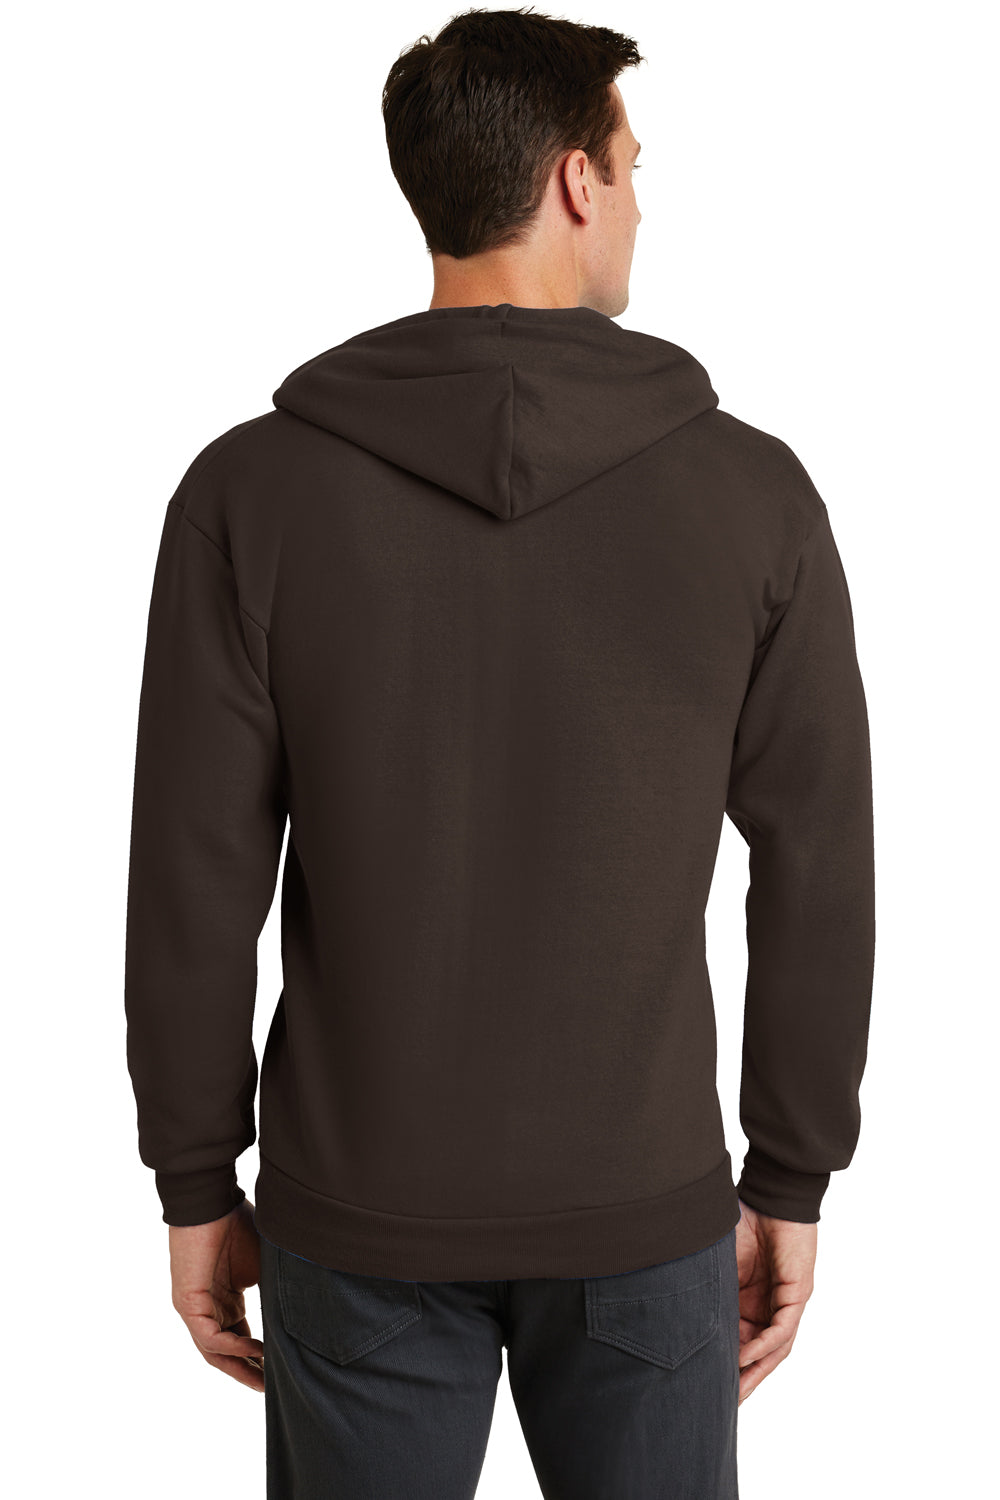 Port & Company PC78ZH Mens Core Fleece Full Zip Hooded Sweatshirt Hoodie Chocolate Brown Back